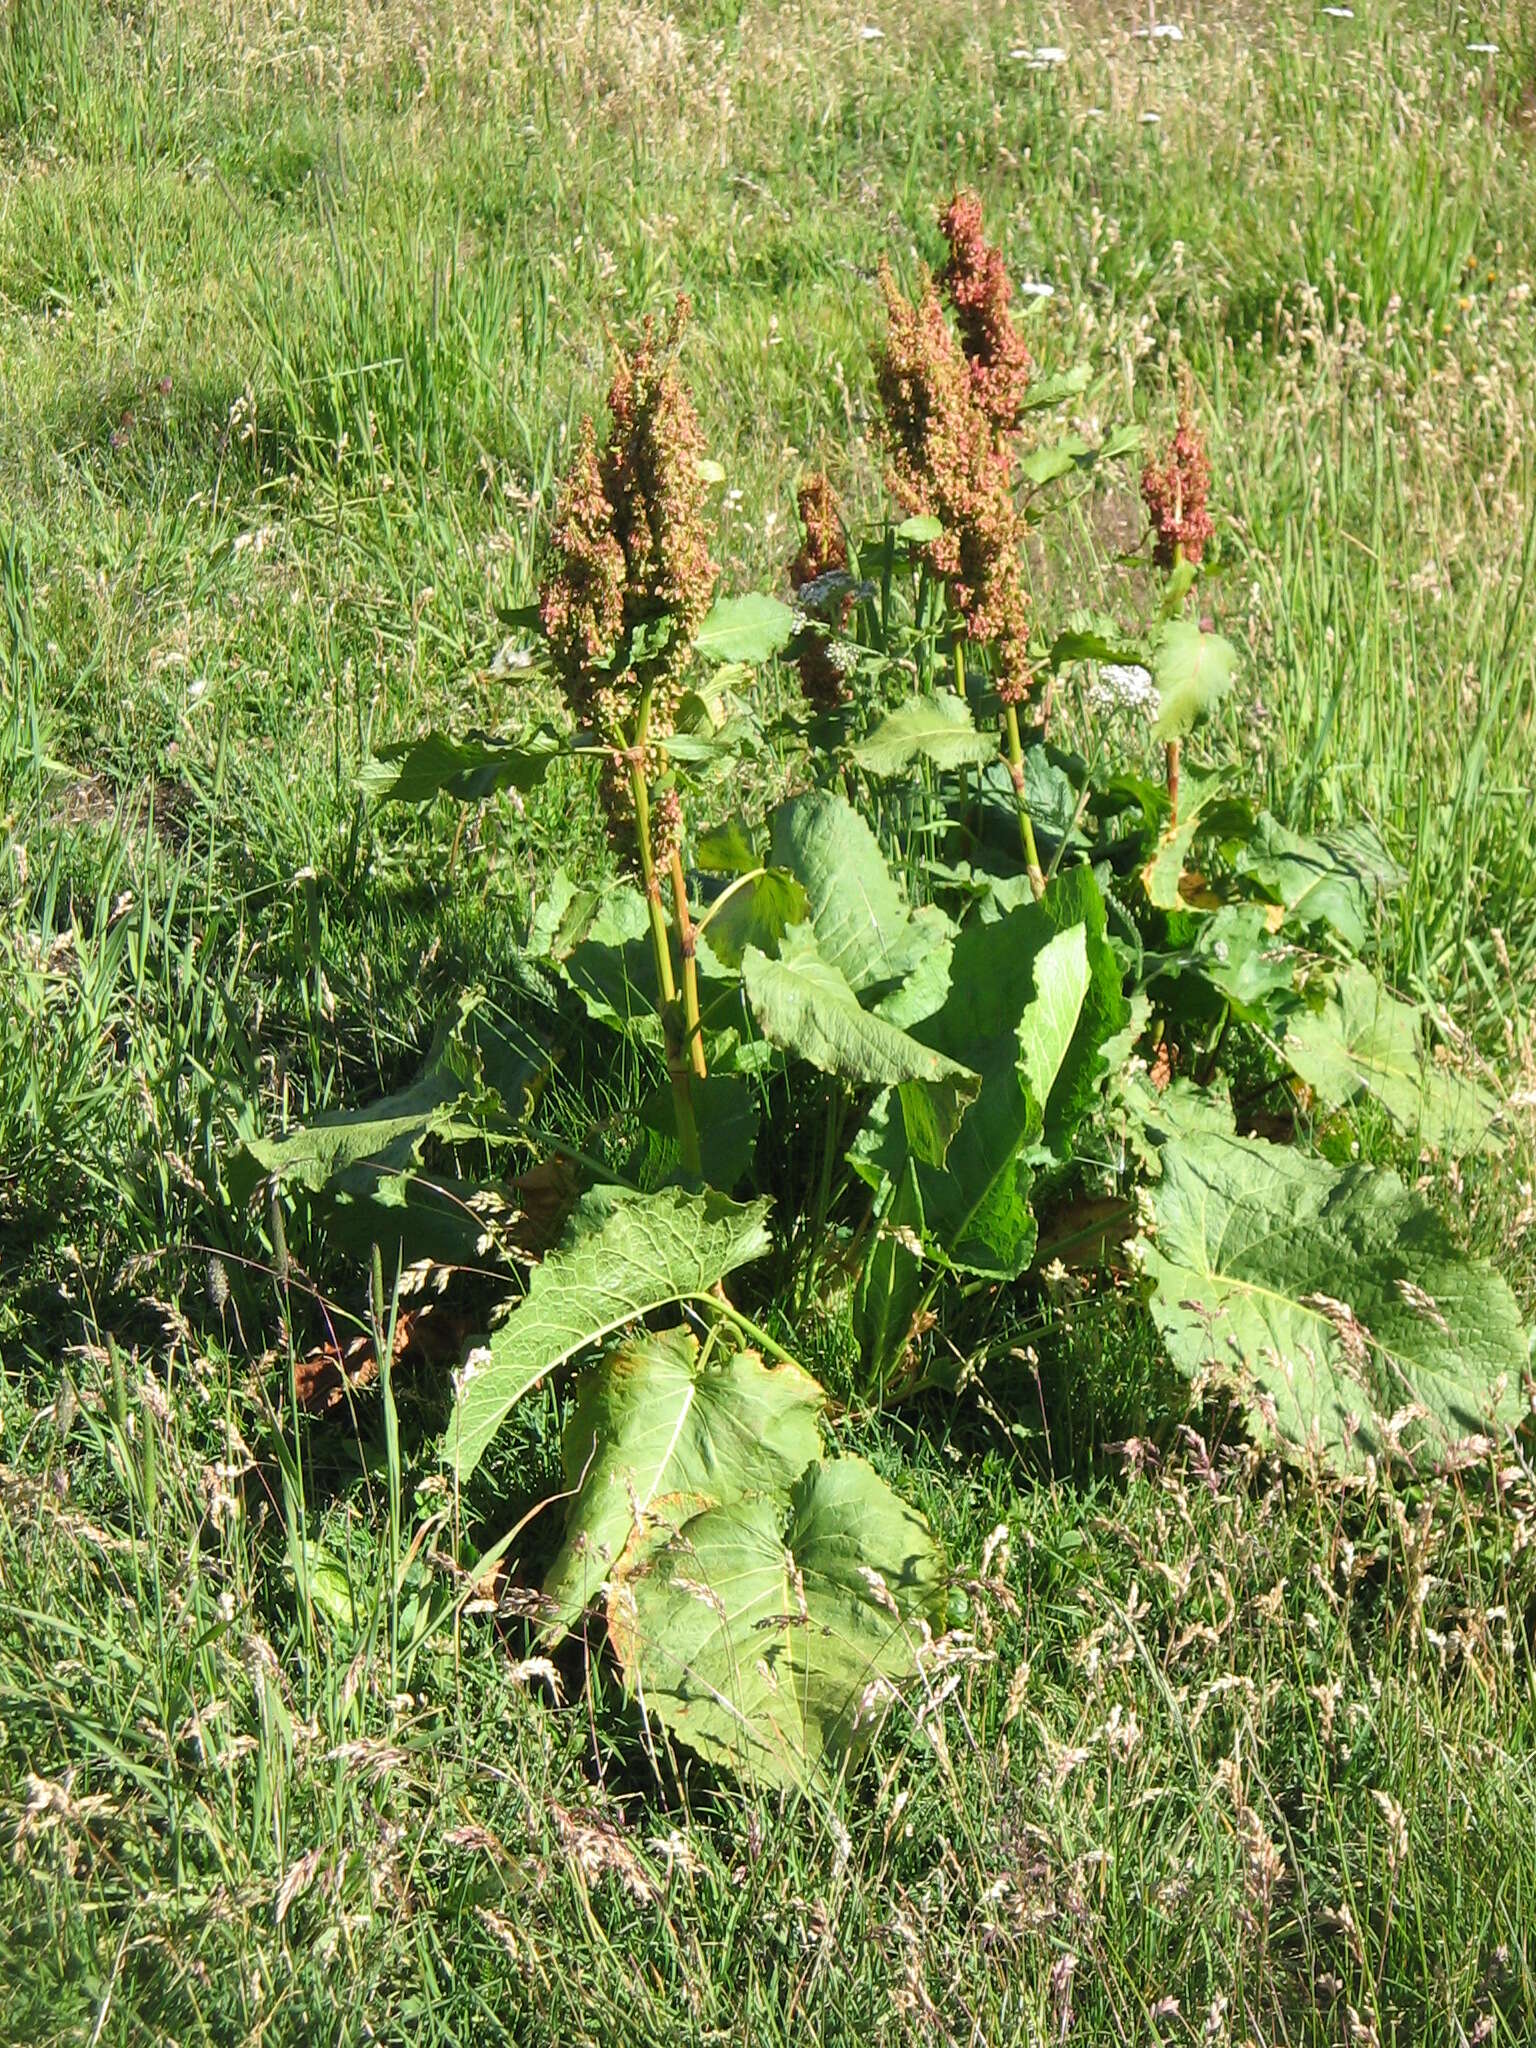 Image of Munk's rhubarb